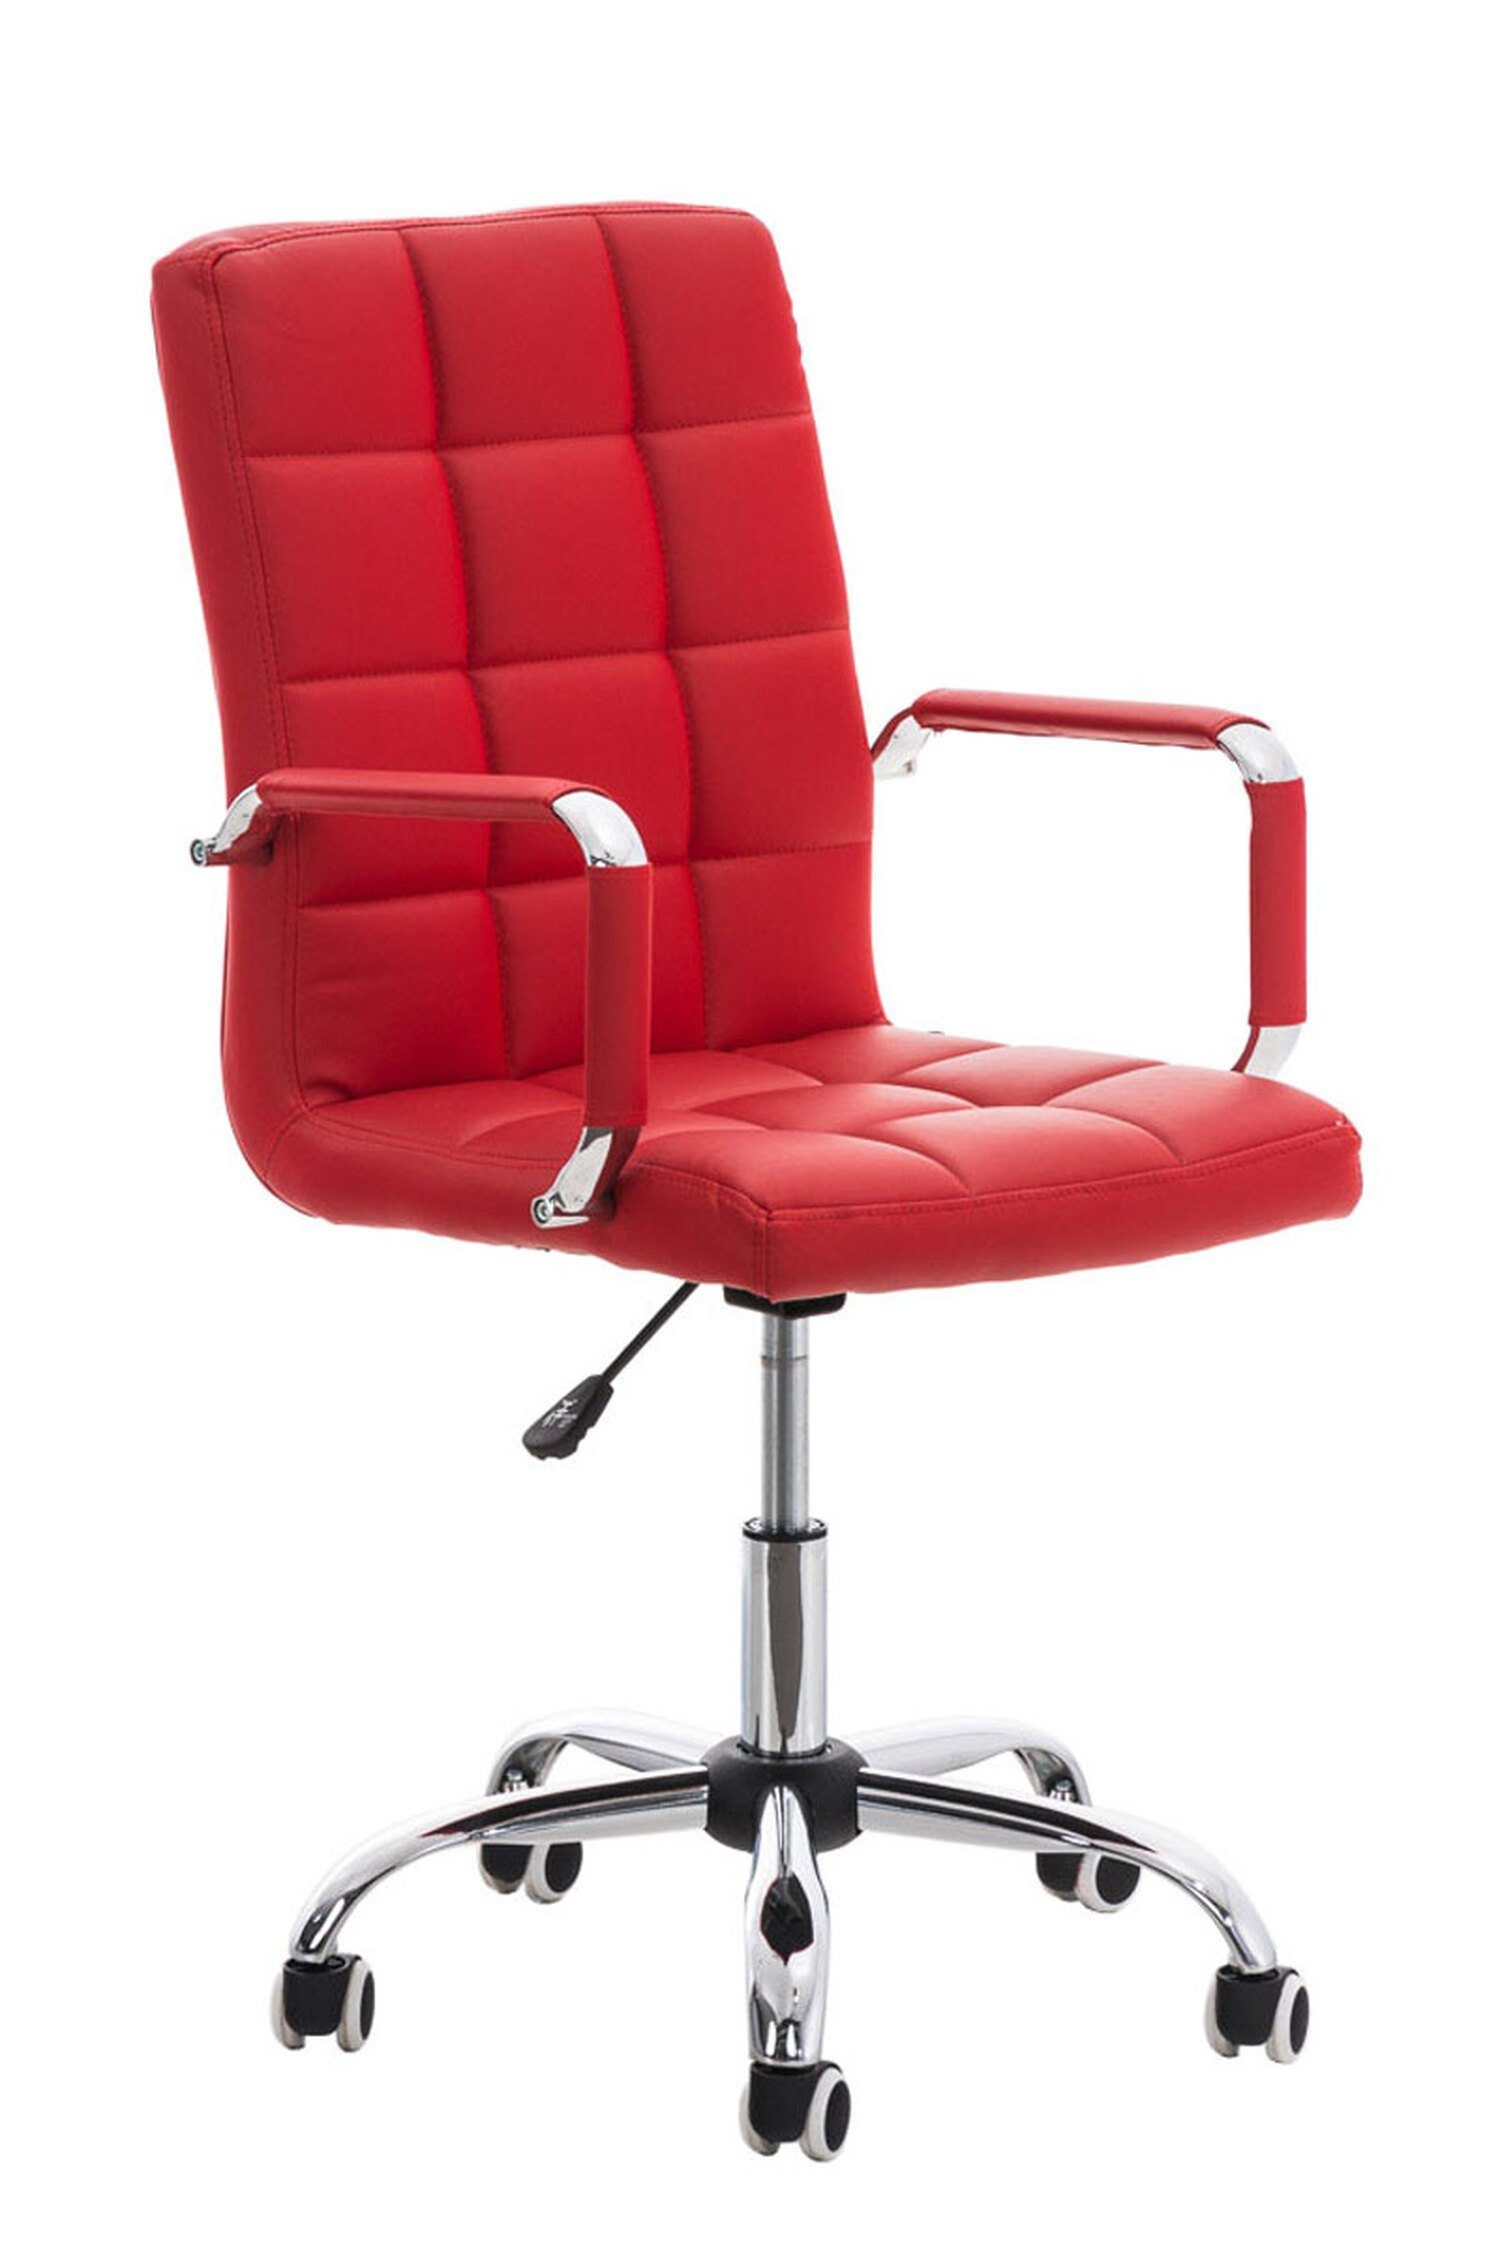 TPFLiving Bürostuhl Deal V2 mit bequemer Rückenlehne (Schreibtischstuhl, Drehstuhl, Konferenzstuhl, Chefsessel), Gestell: Metall chrom - Sitzfläche: Kunstleder rot